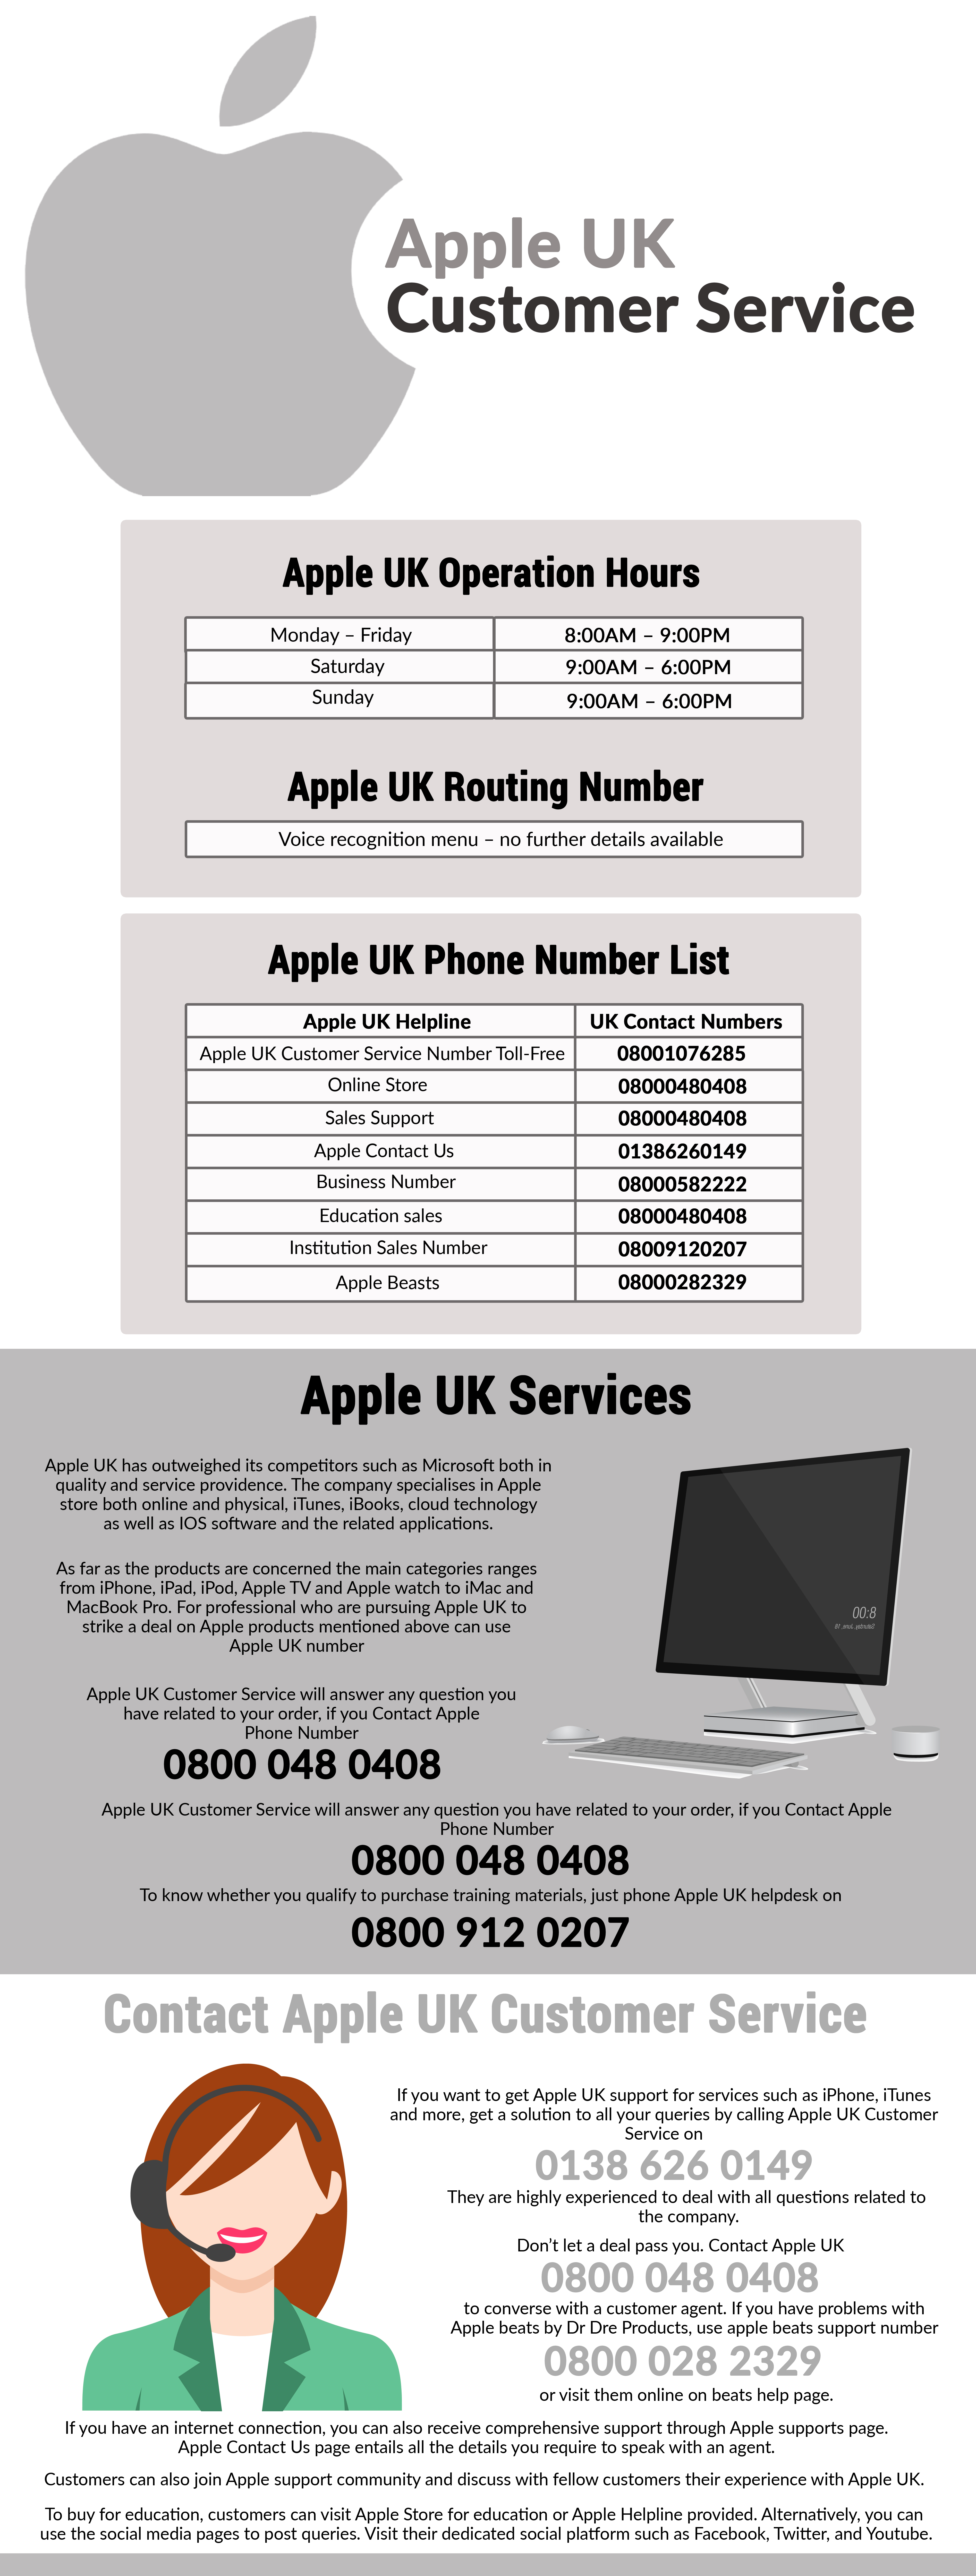 Apple Helpline